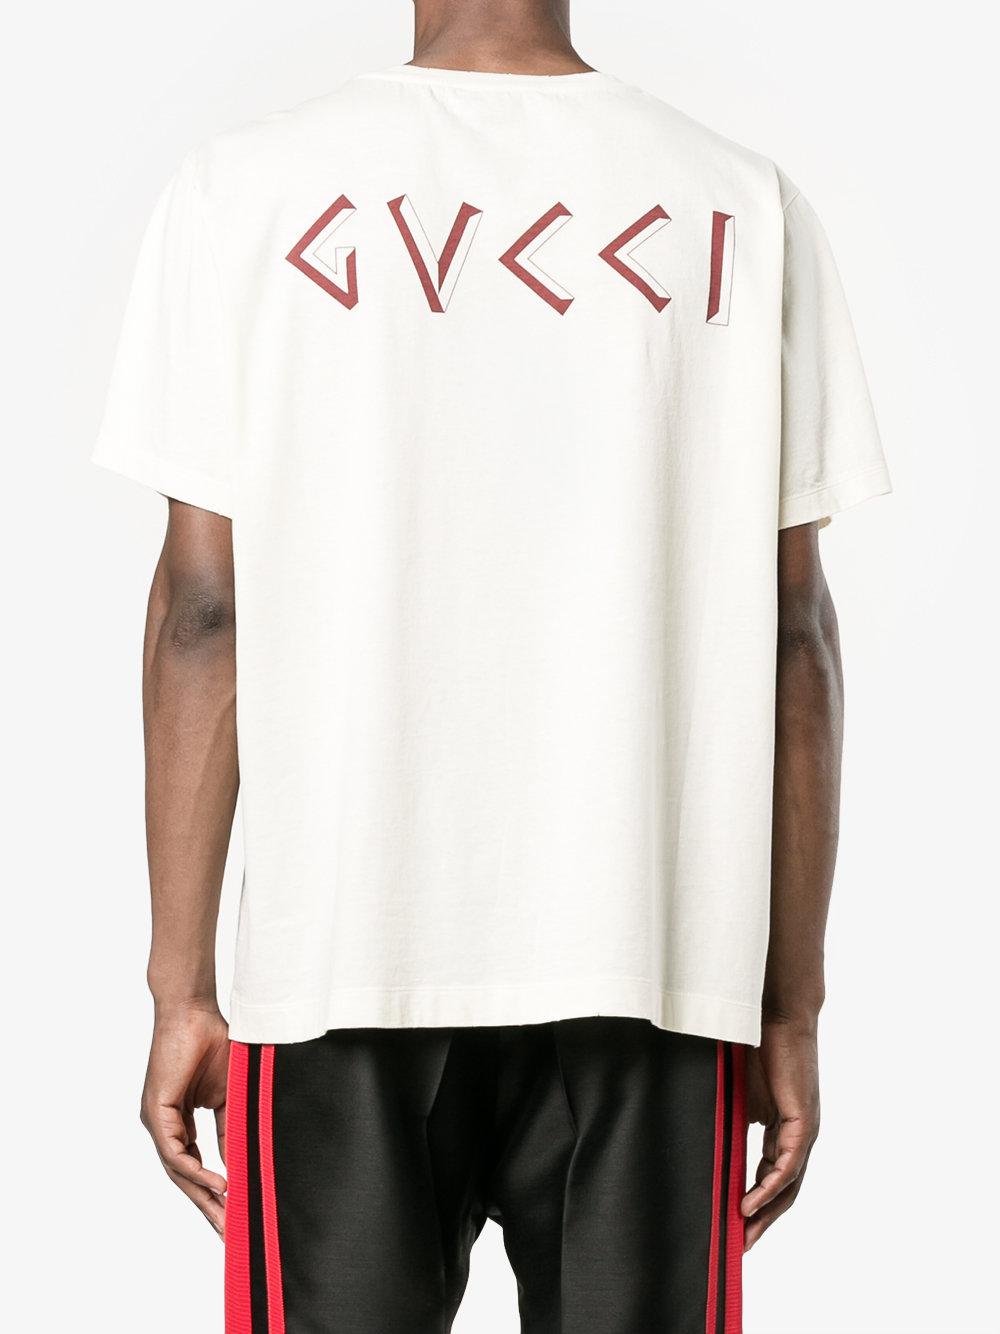 Gucci Cotton Oversized Greek Print T-shirt for Men - Lyst